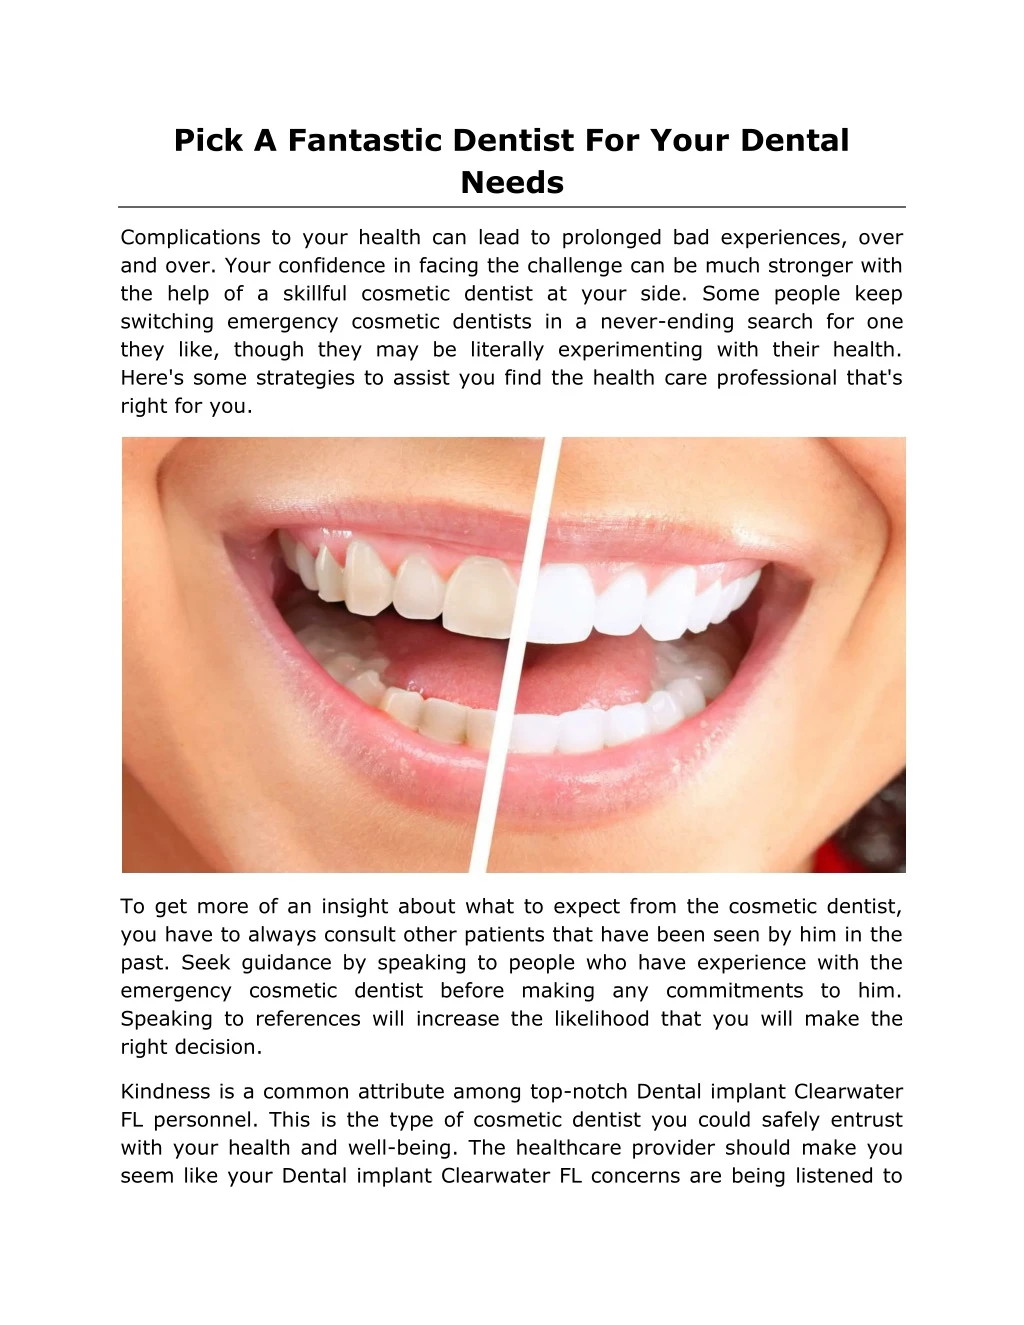 pick a fantastic dentist for your dental needs